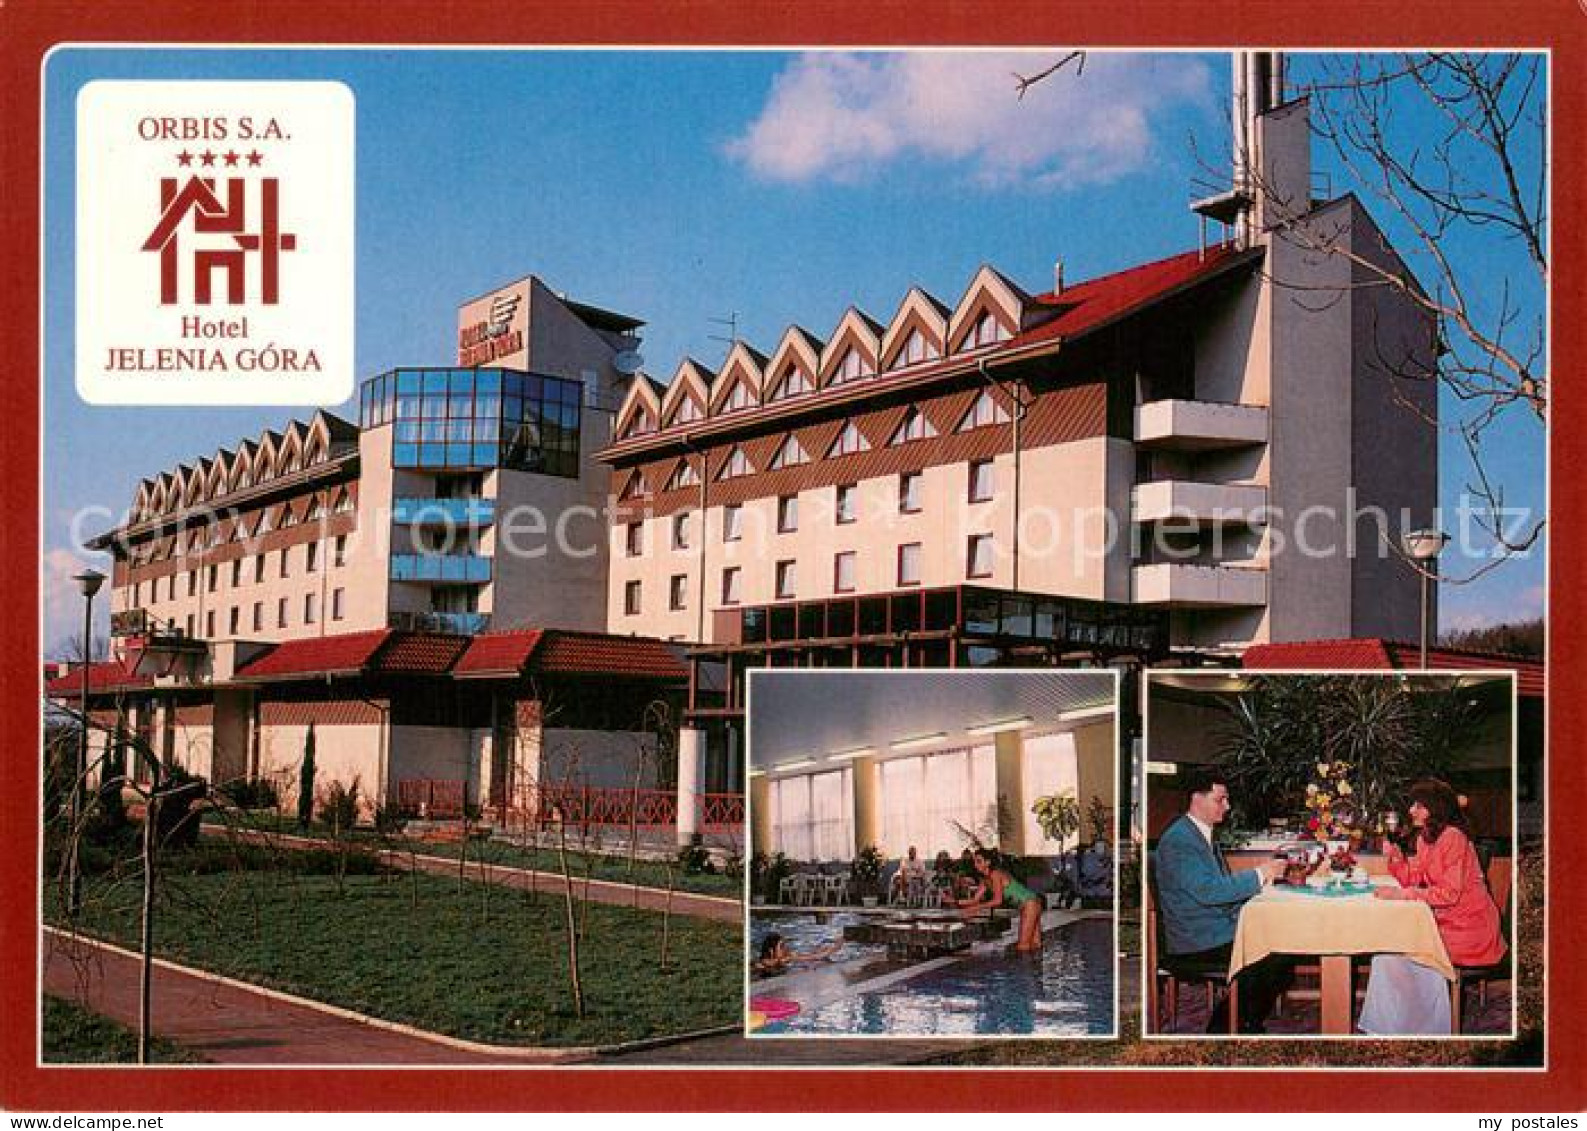 73677951 Jelenia Gora Hirschberg Schlesien Orbis SA Hotel Jelenia Gora Jelenia G - Poland